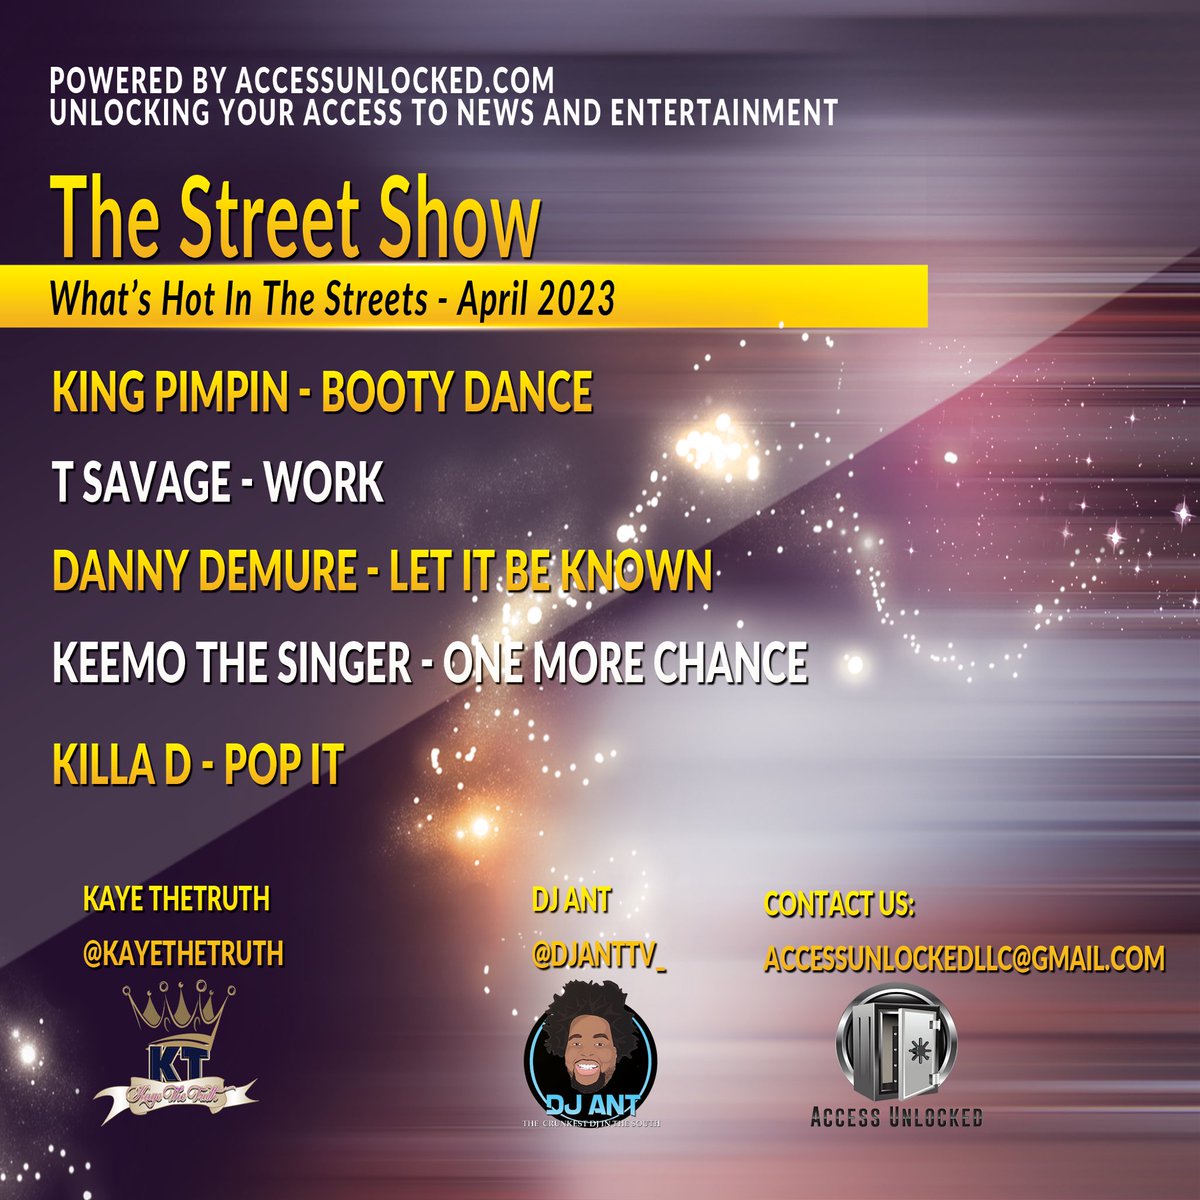 The Street Show - What’s Hot In The Streets #KingPimpin #TSavage #KillaD #keemothesinger #djant #kayethetruth #accessunlocked #thestreetshow #dannydemure #newmusic #artists #djs #branding #marketing #promo #hiphop #rnb #radio #podcast